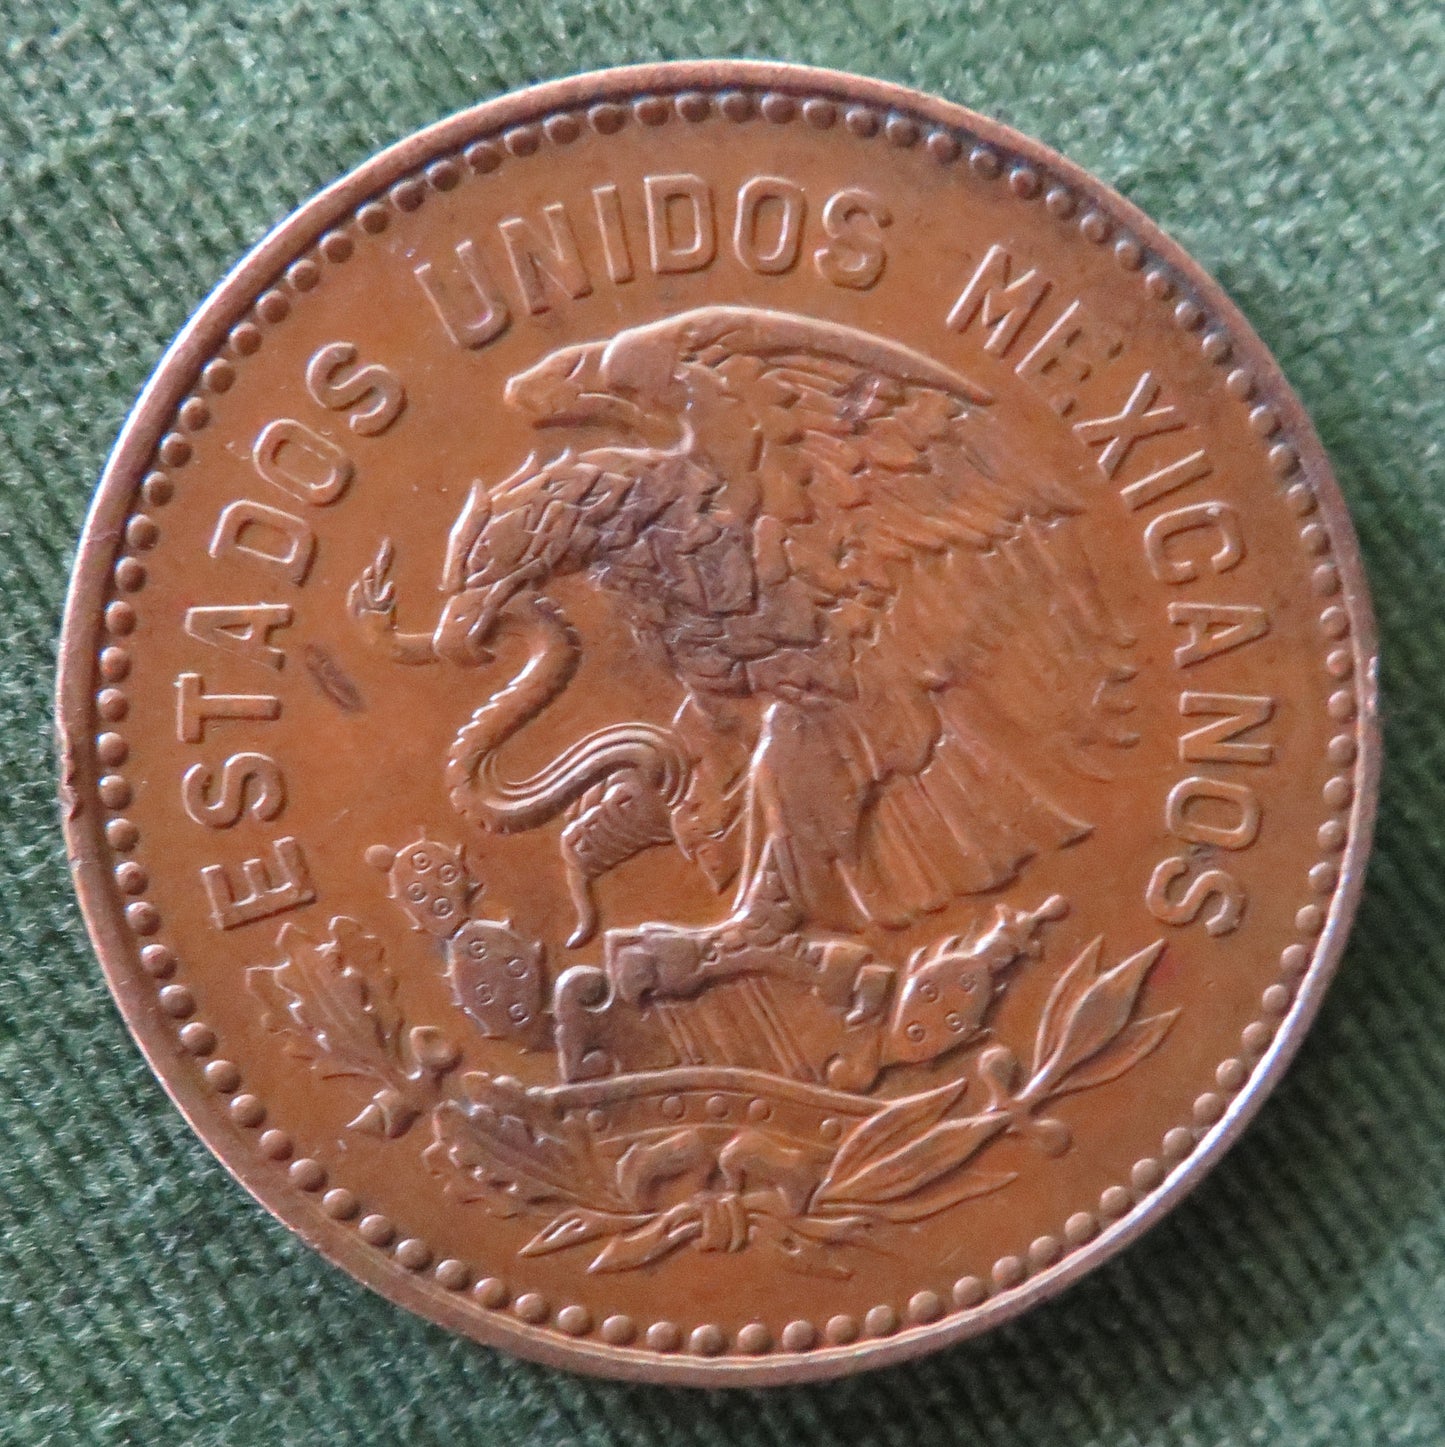 Mexican 1956 50 Centavos Coin - EF